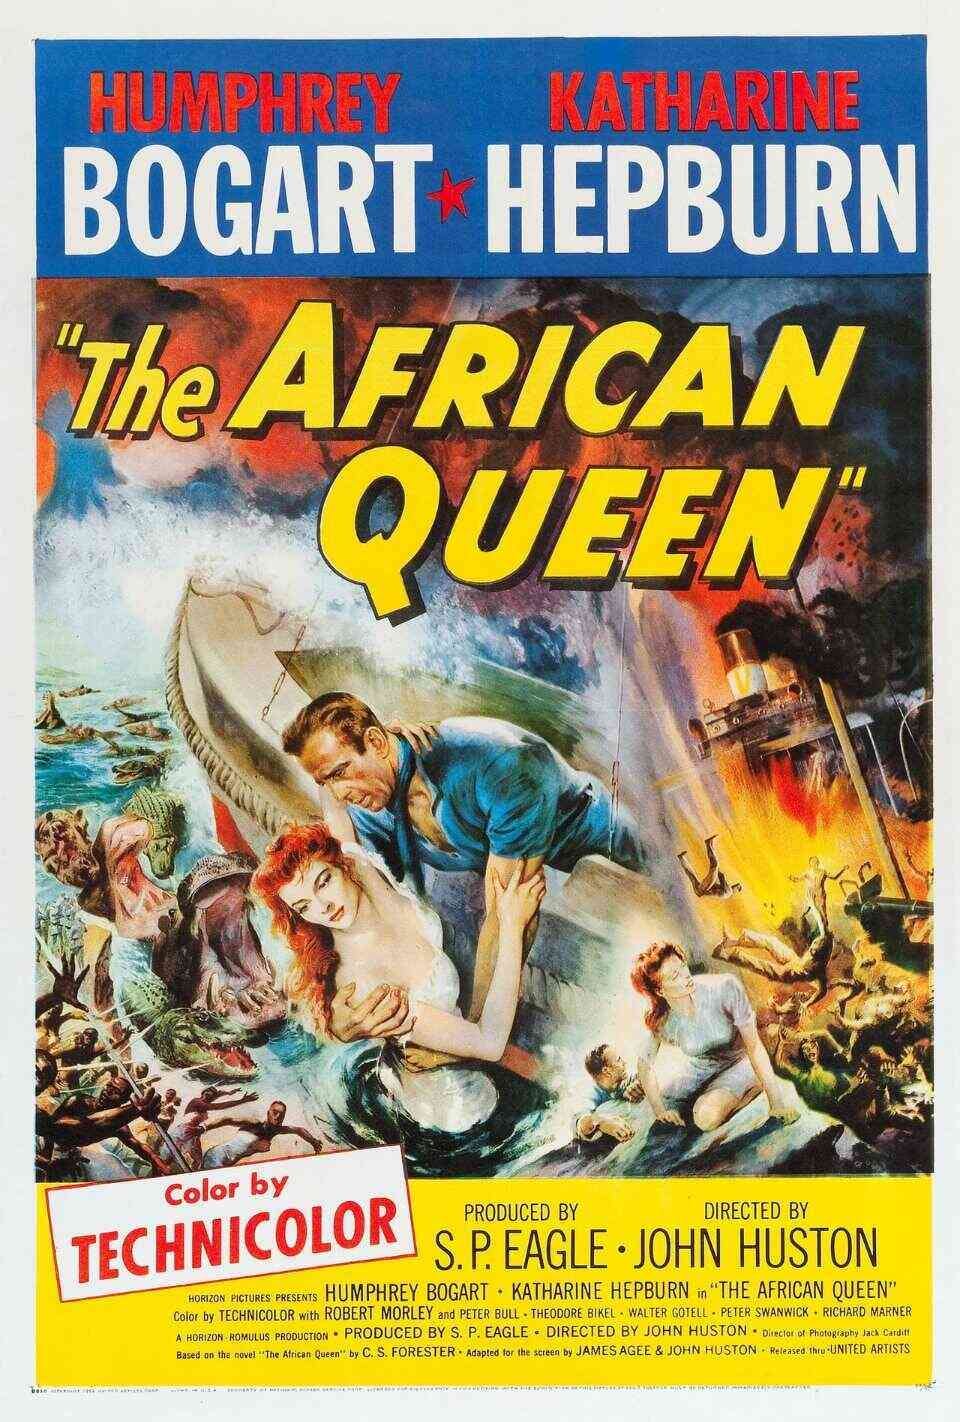 Read The African Queen screenplay.